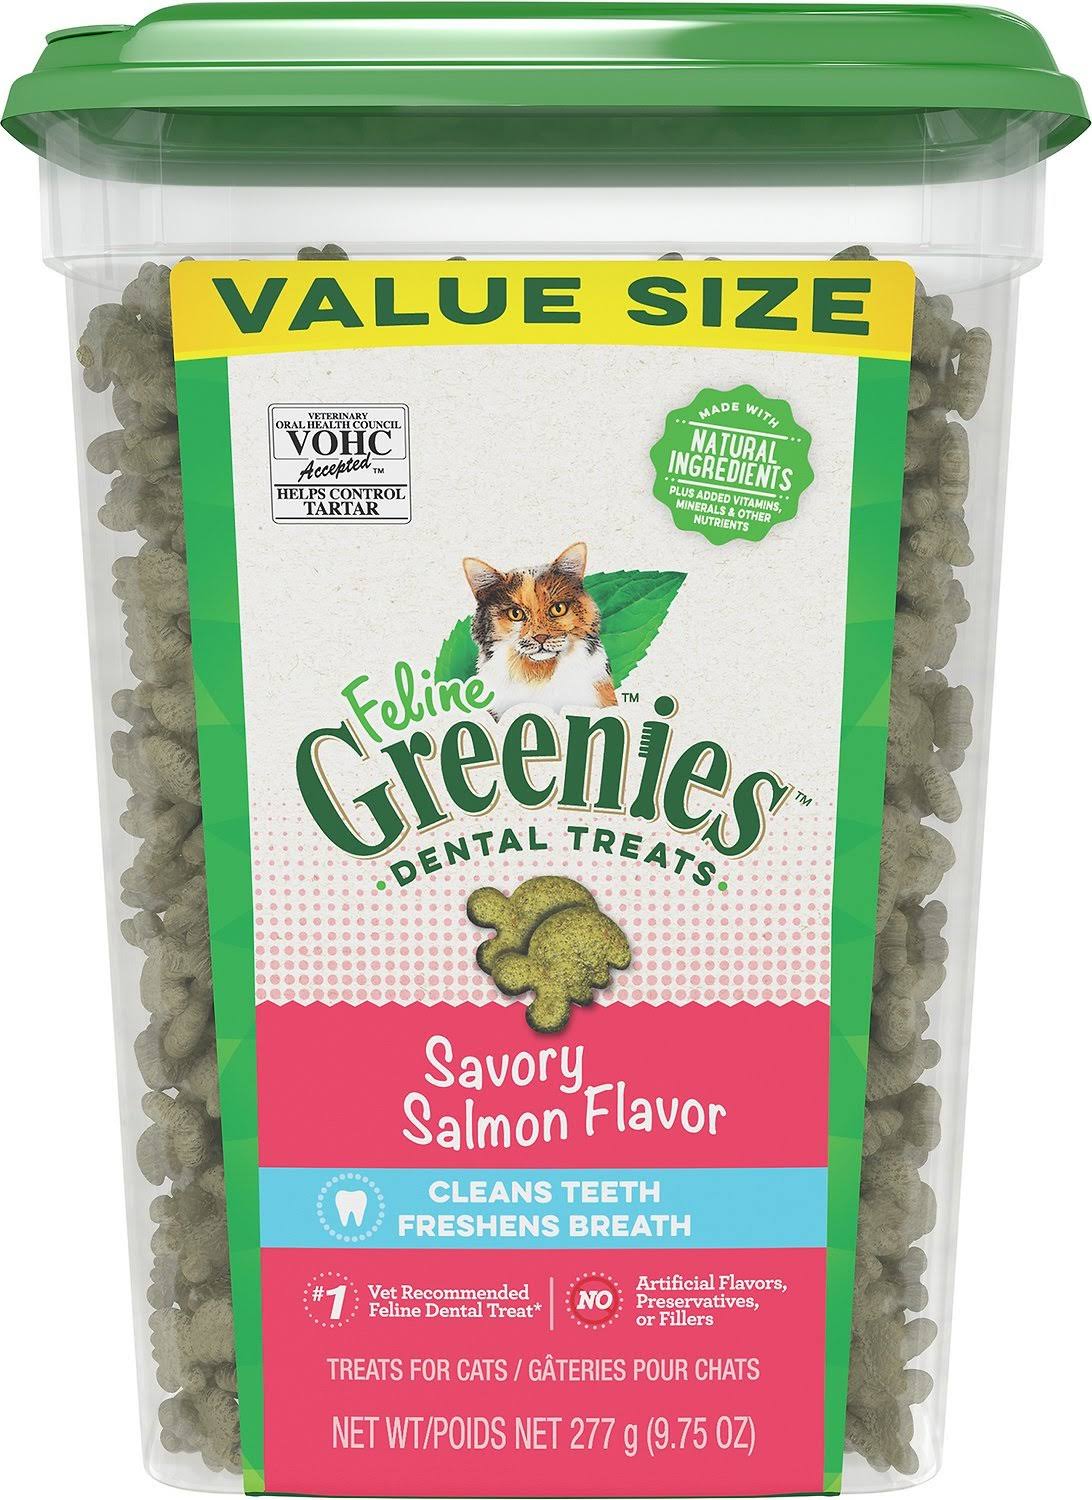 Greenies Feline Natural Dental Treats Tempting Salmon Flavor, 9.75 oz (Pack of 1)